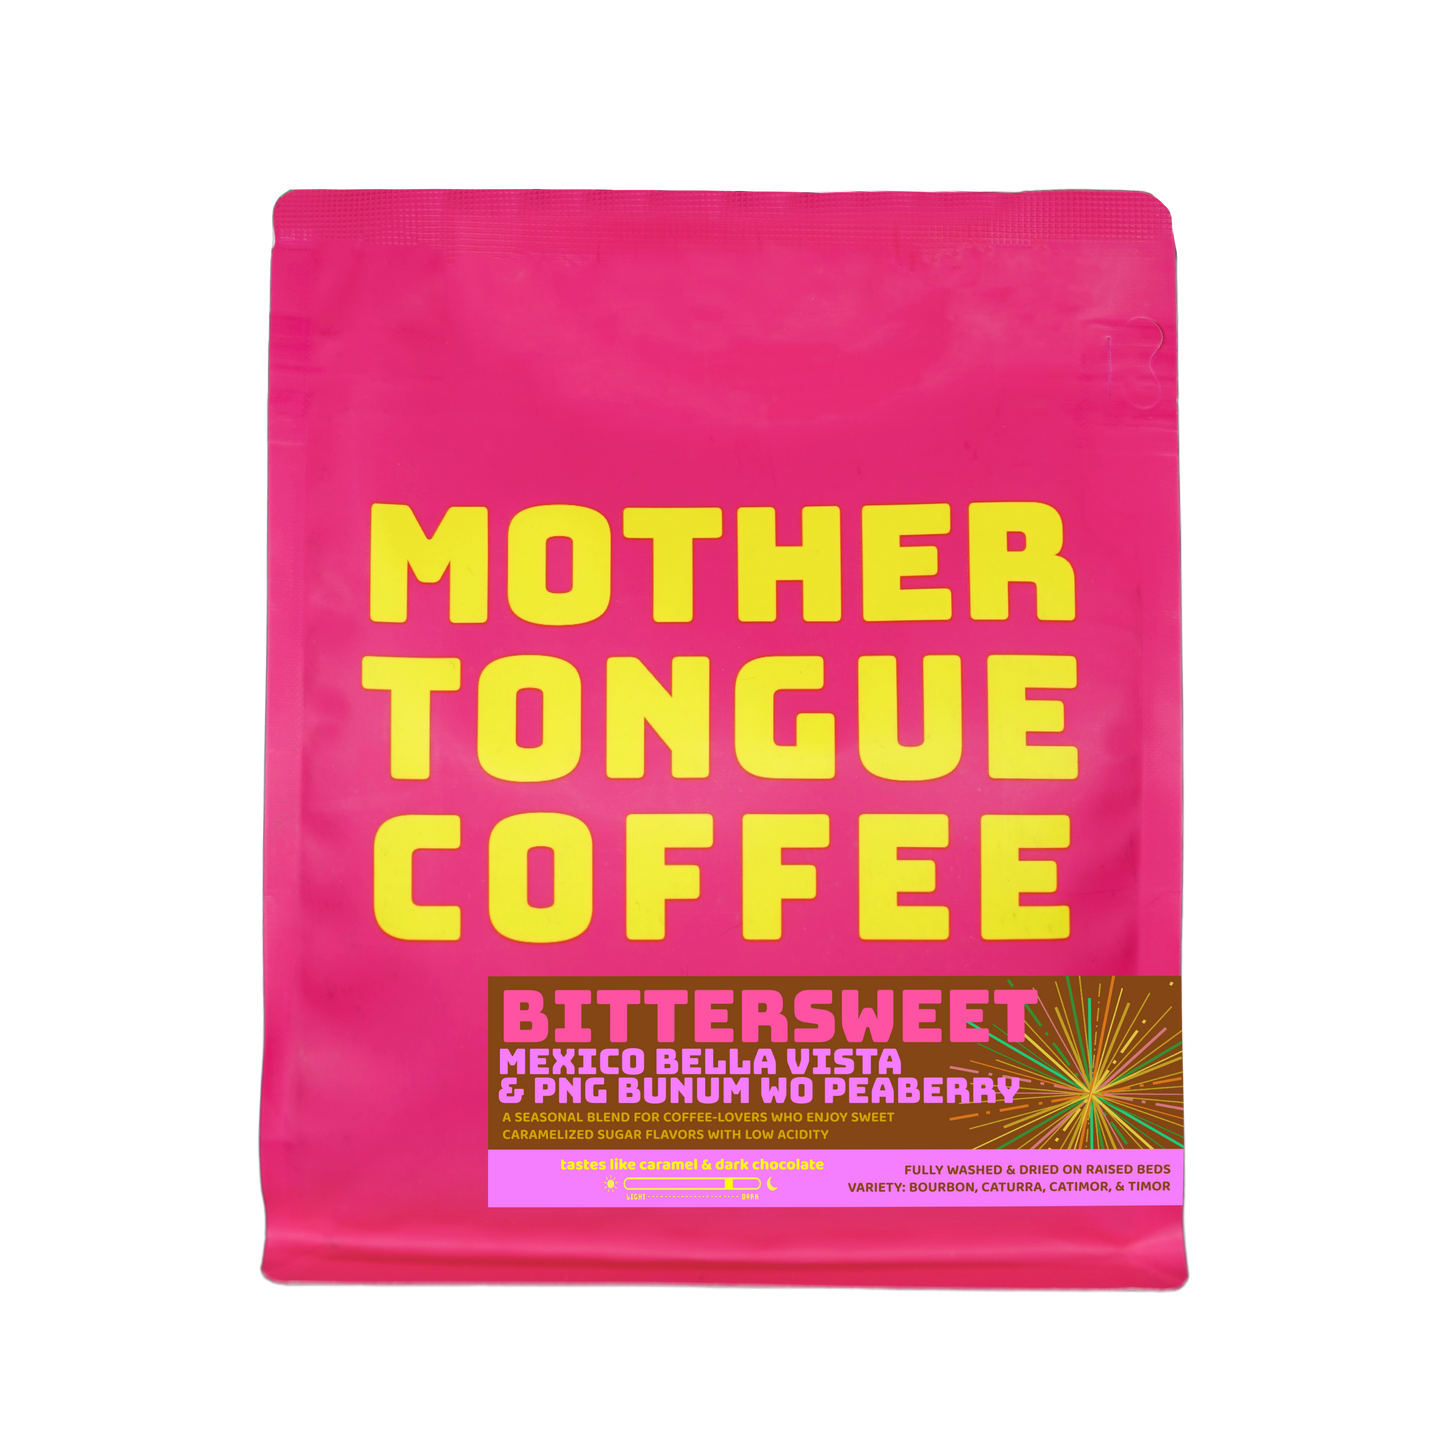 BITTERSWEET - A medium-dark blend - Mother Tongue Coffee